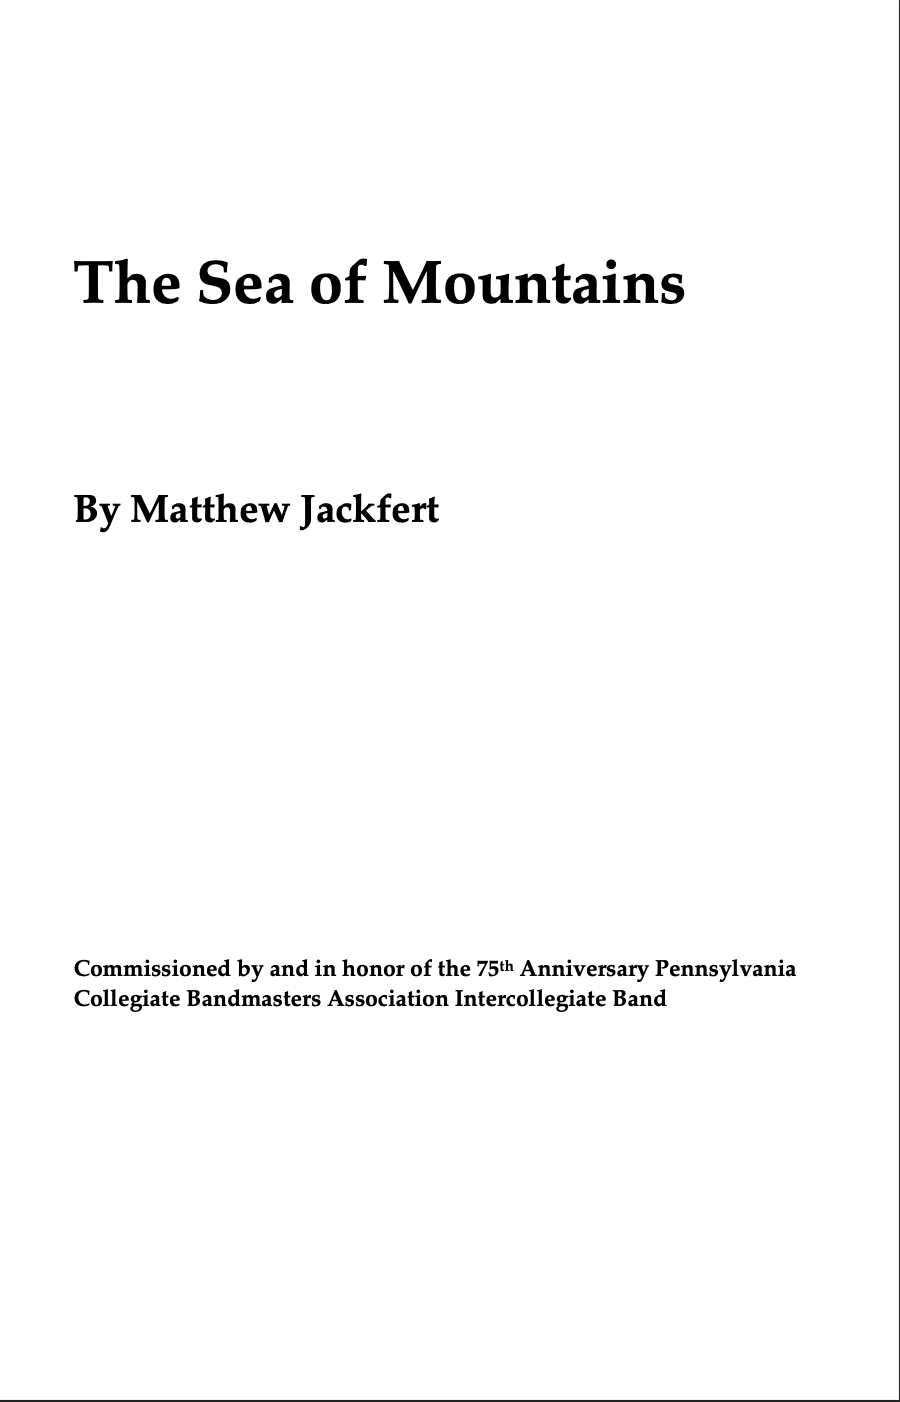 Sea Of Mountains by Matthew Jackfert